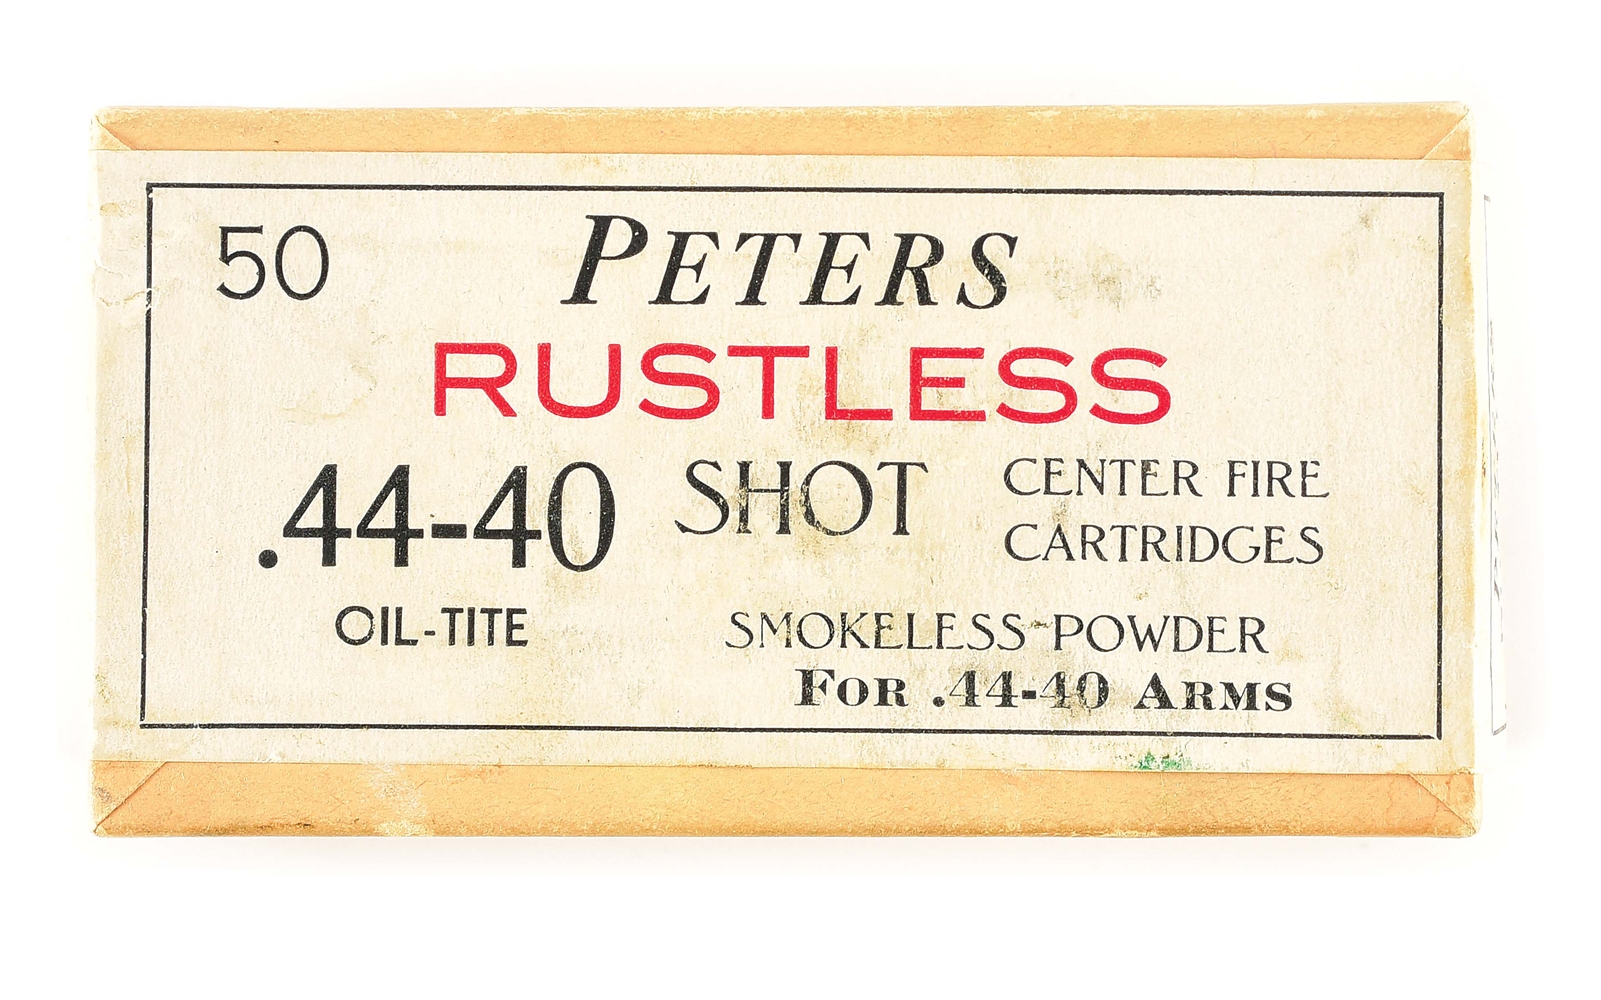 PETERS .44-40 SHOT RUSTLESS CARTRIDGE BOX.